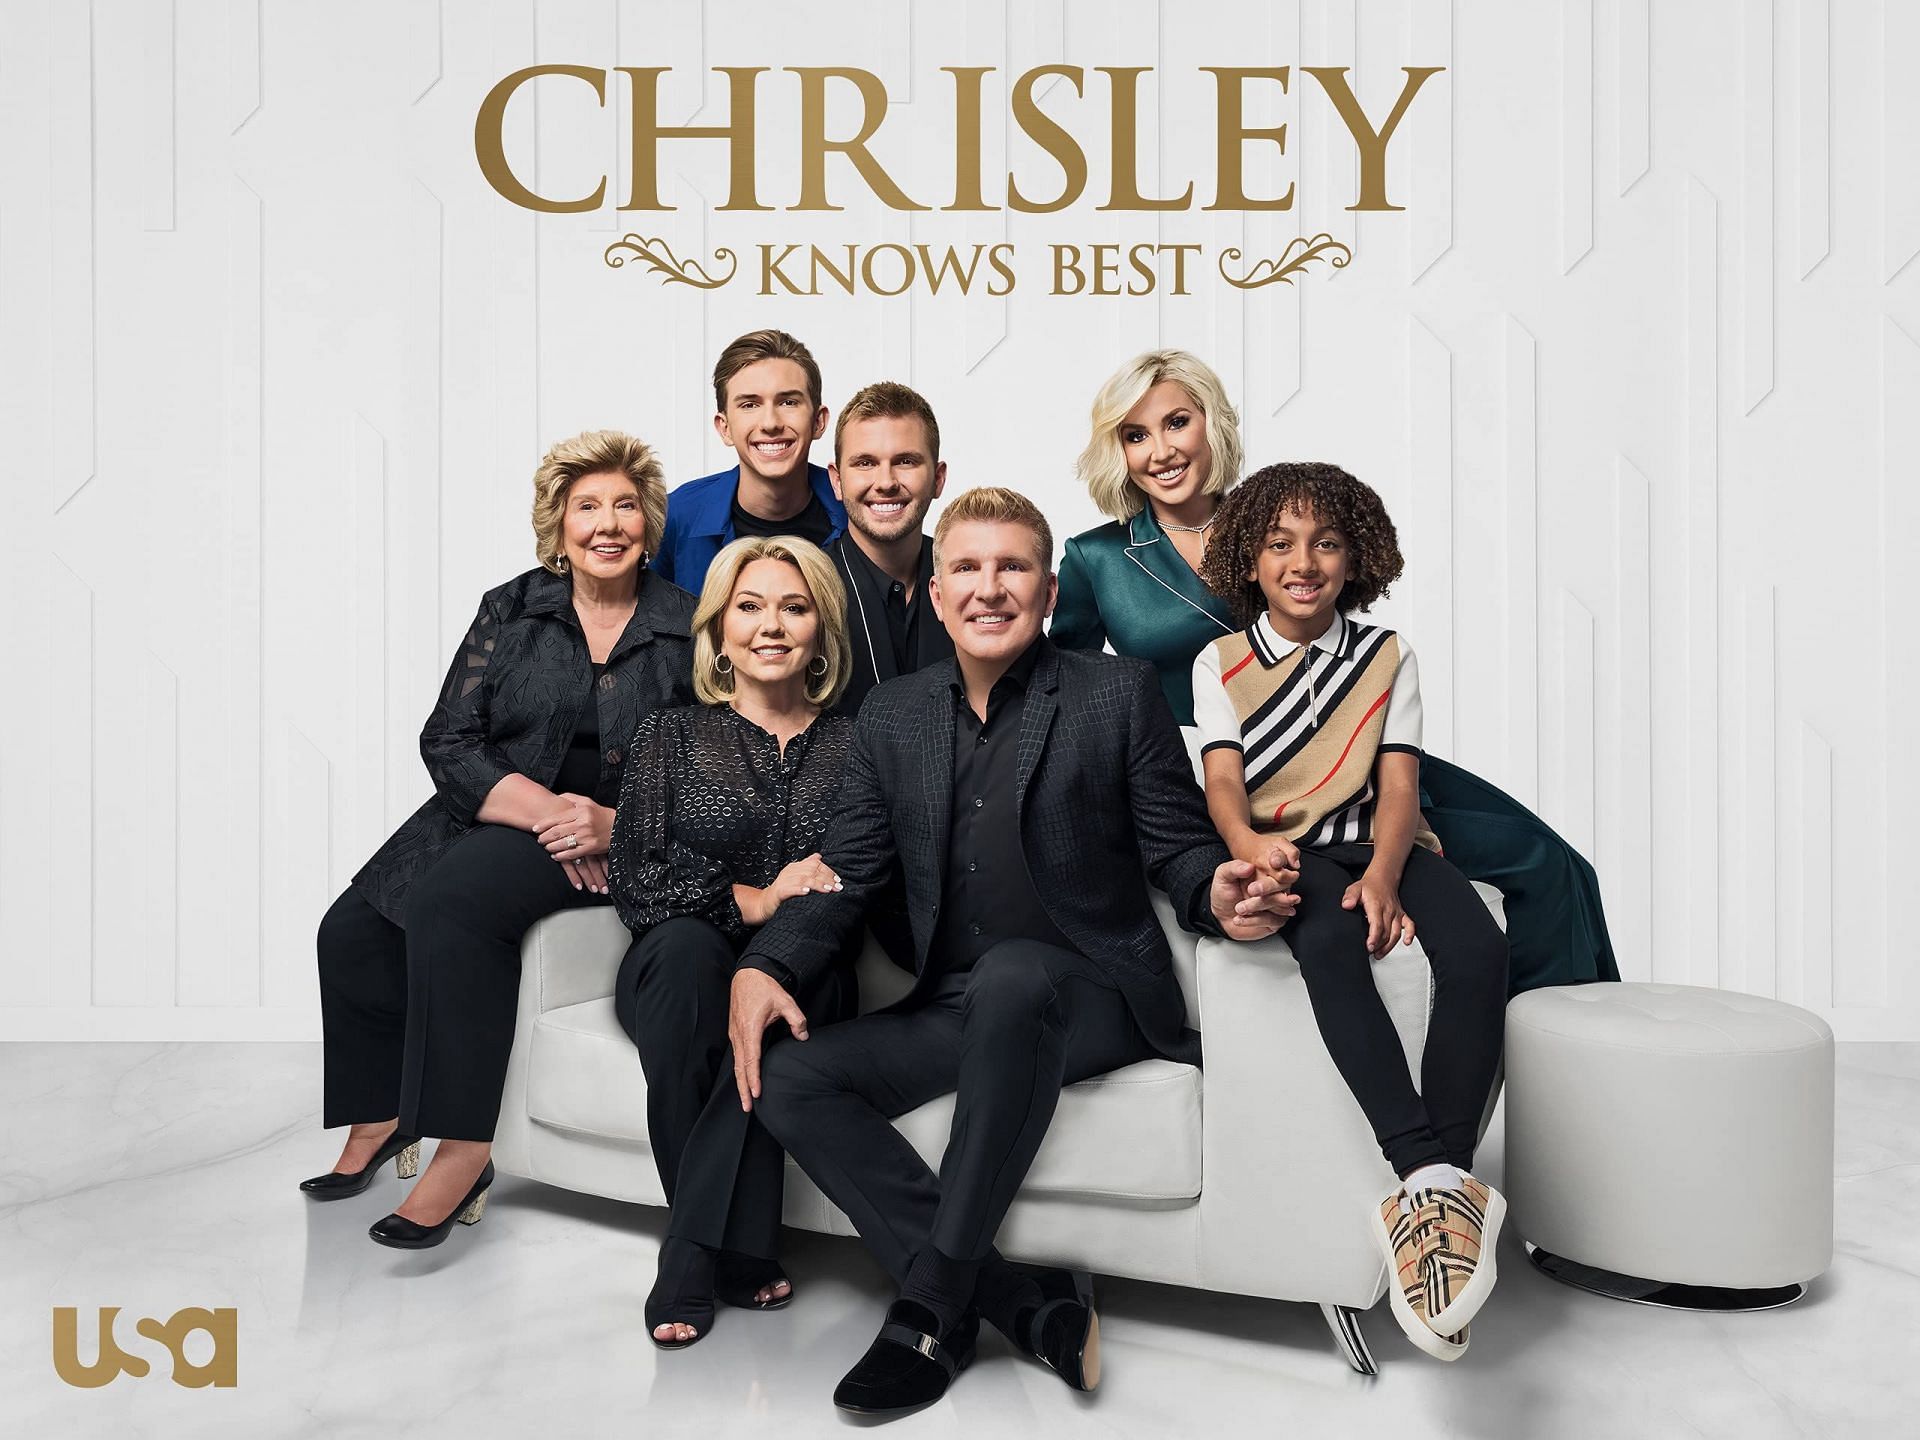 Chrisley Knows Best, Season 9 (Image via USA Network)